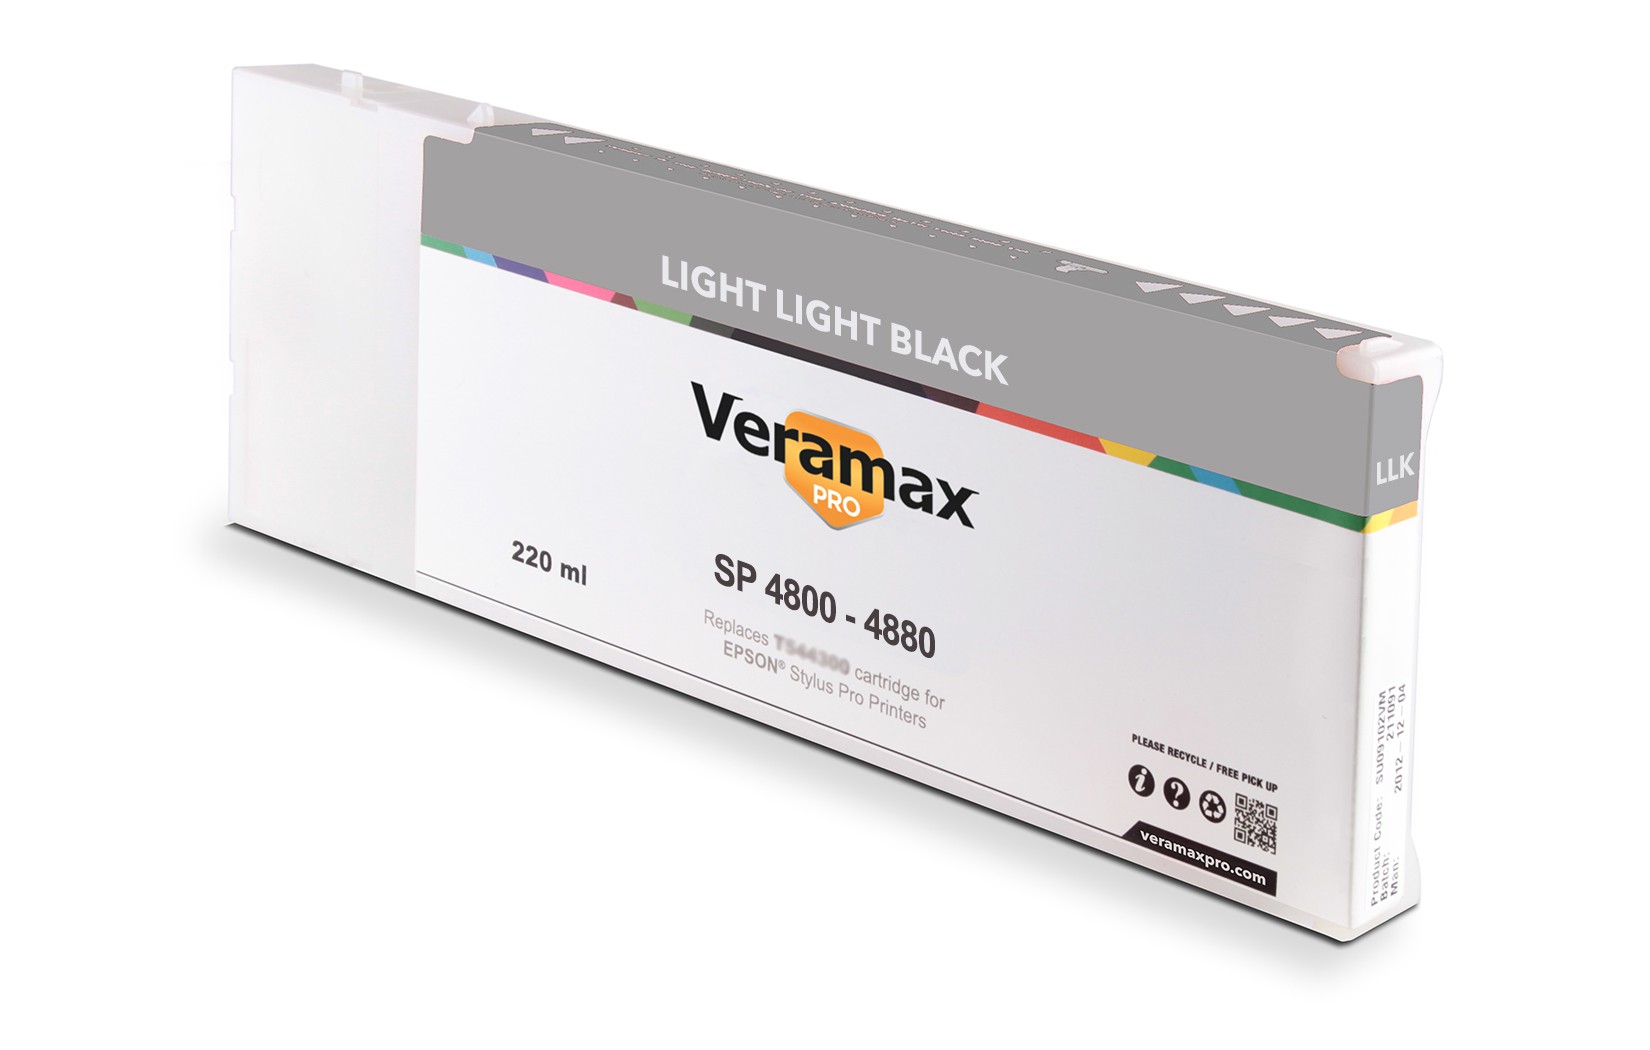 Veramax PRO SP 4800/4880 220ml Light Light Black